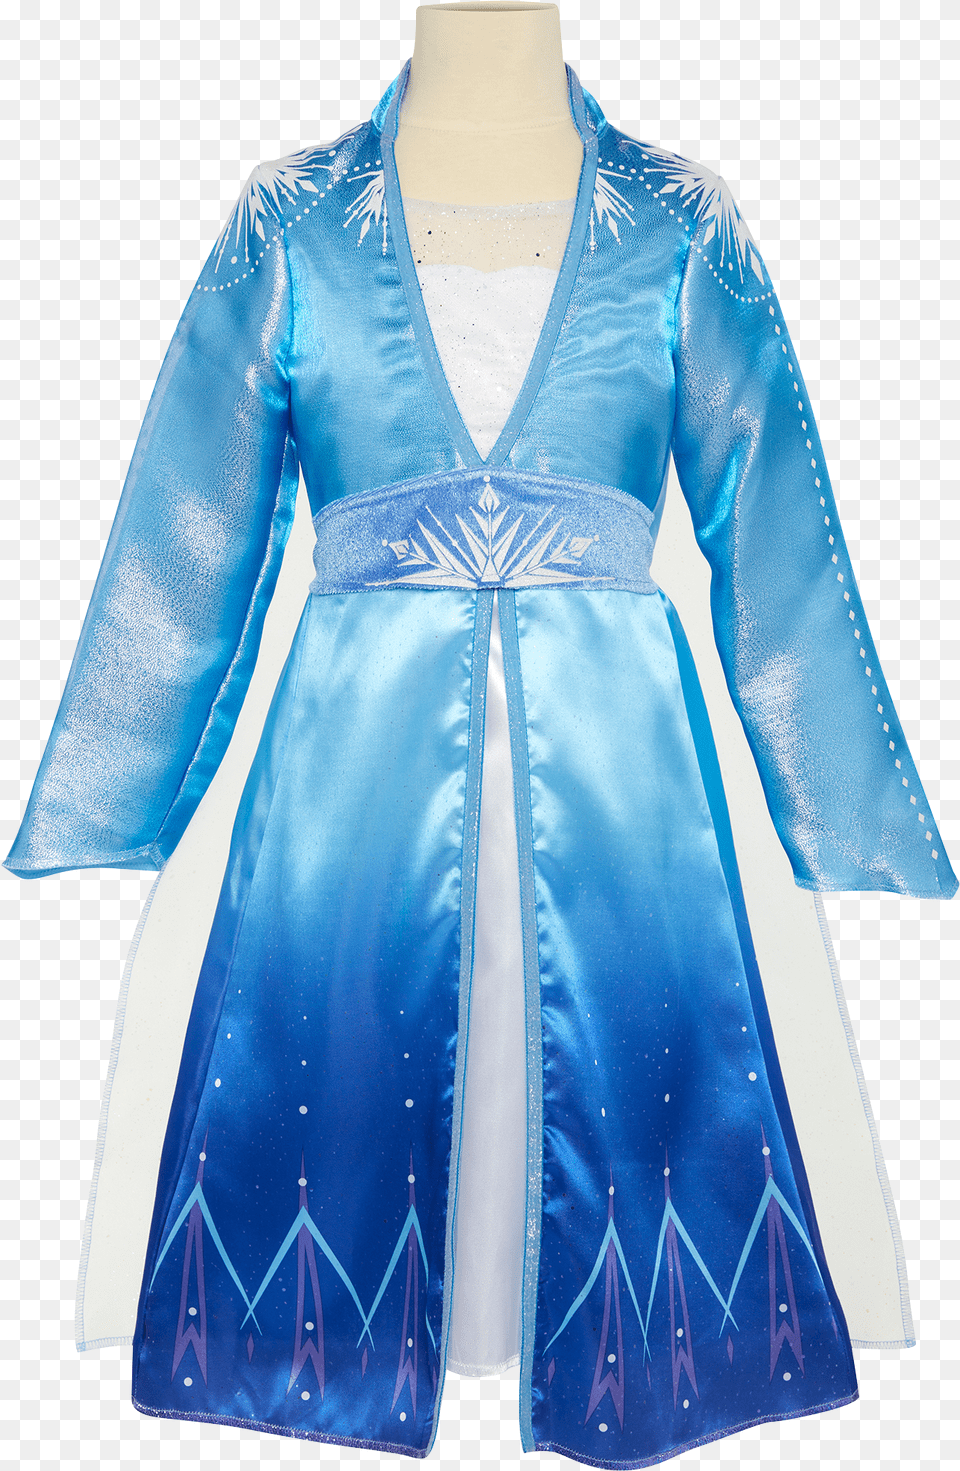 Frozen 2 Travel Dress Frozen Dress Up 2, Clothing, Coat, Fashion, Formal Wear Png Image